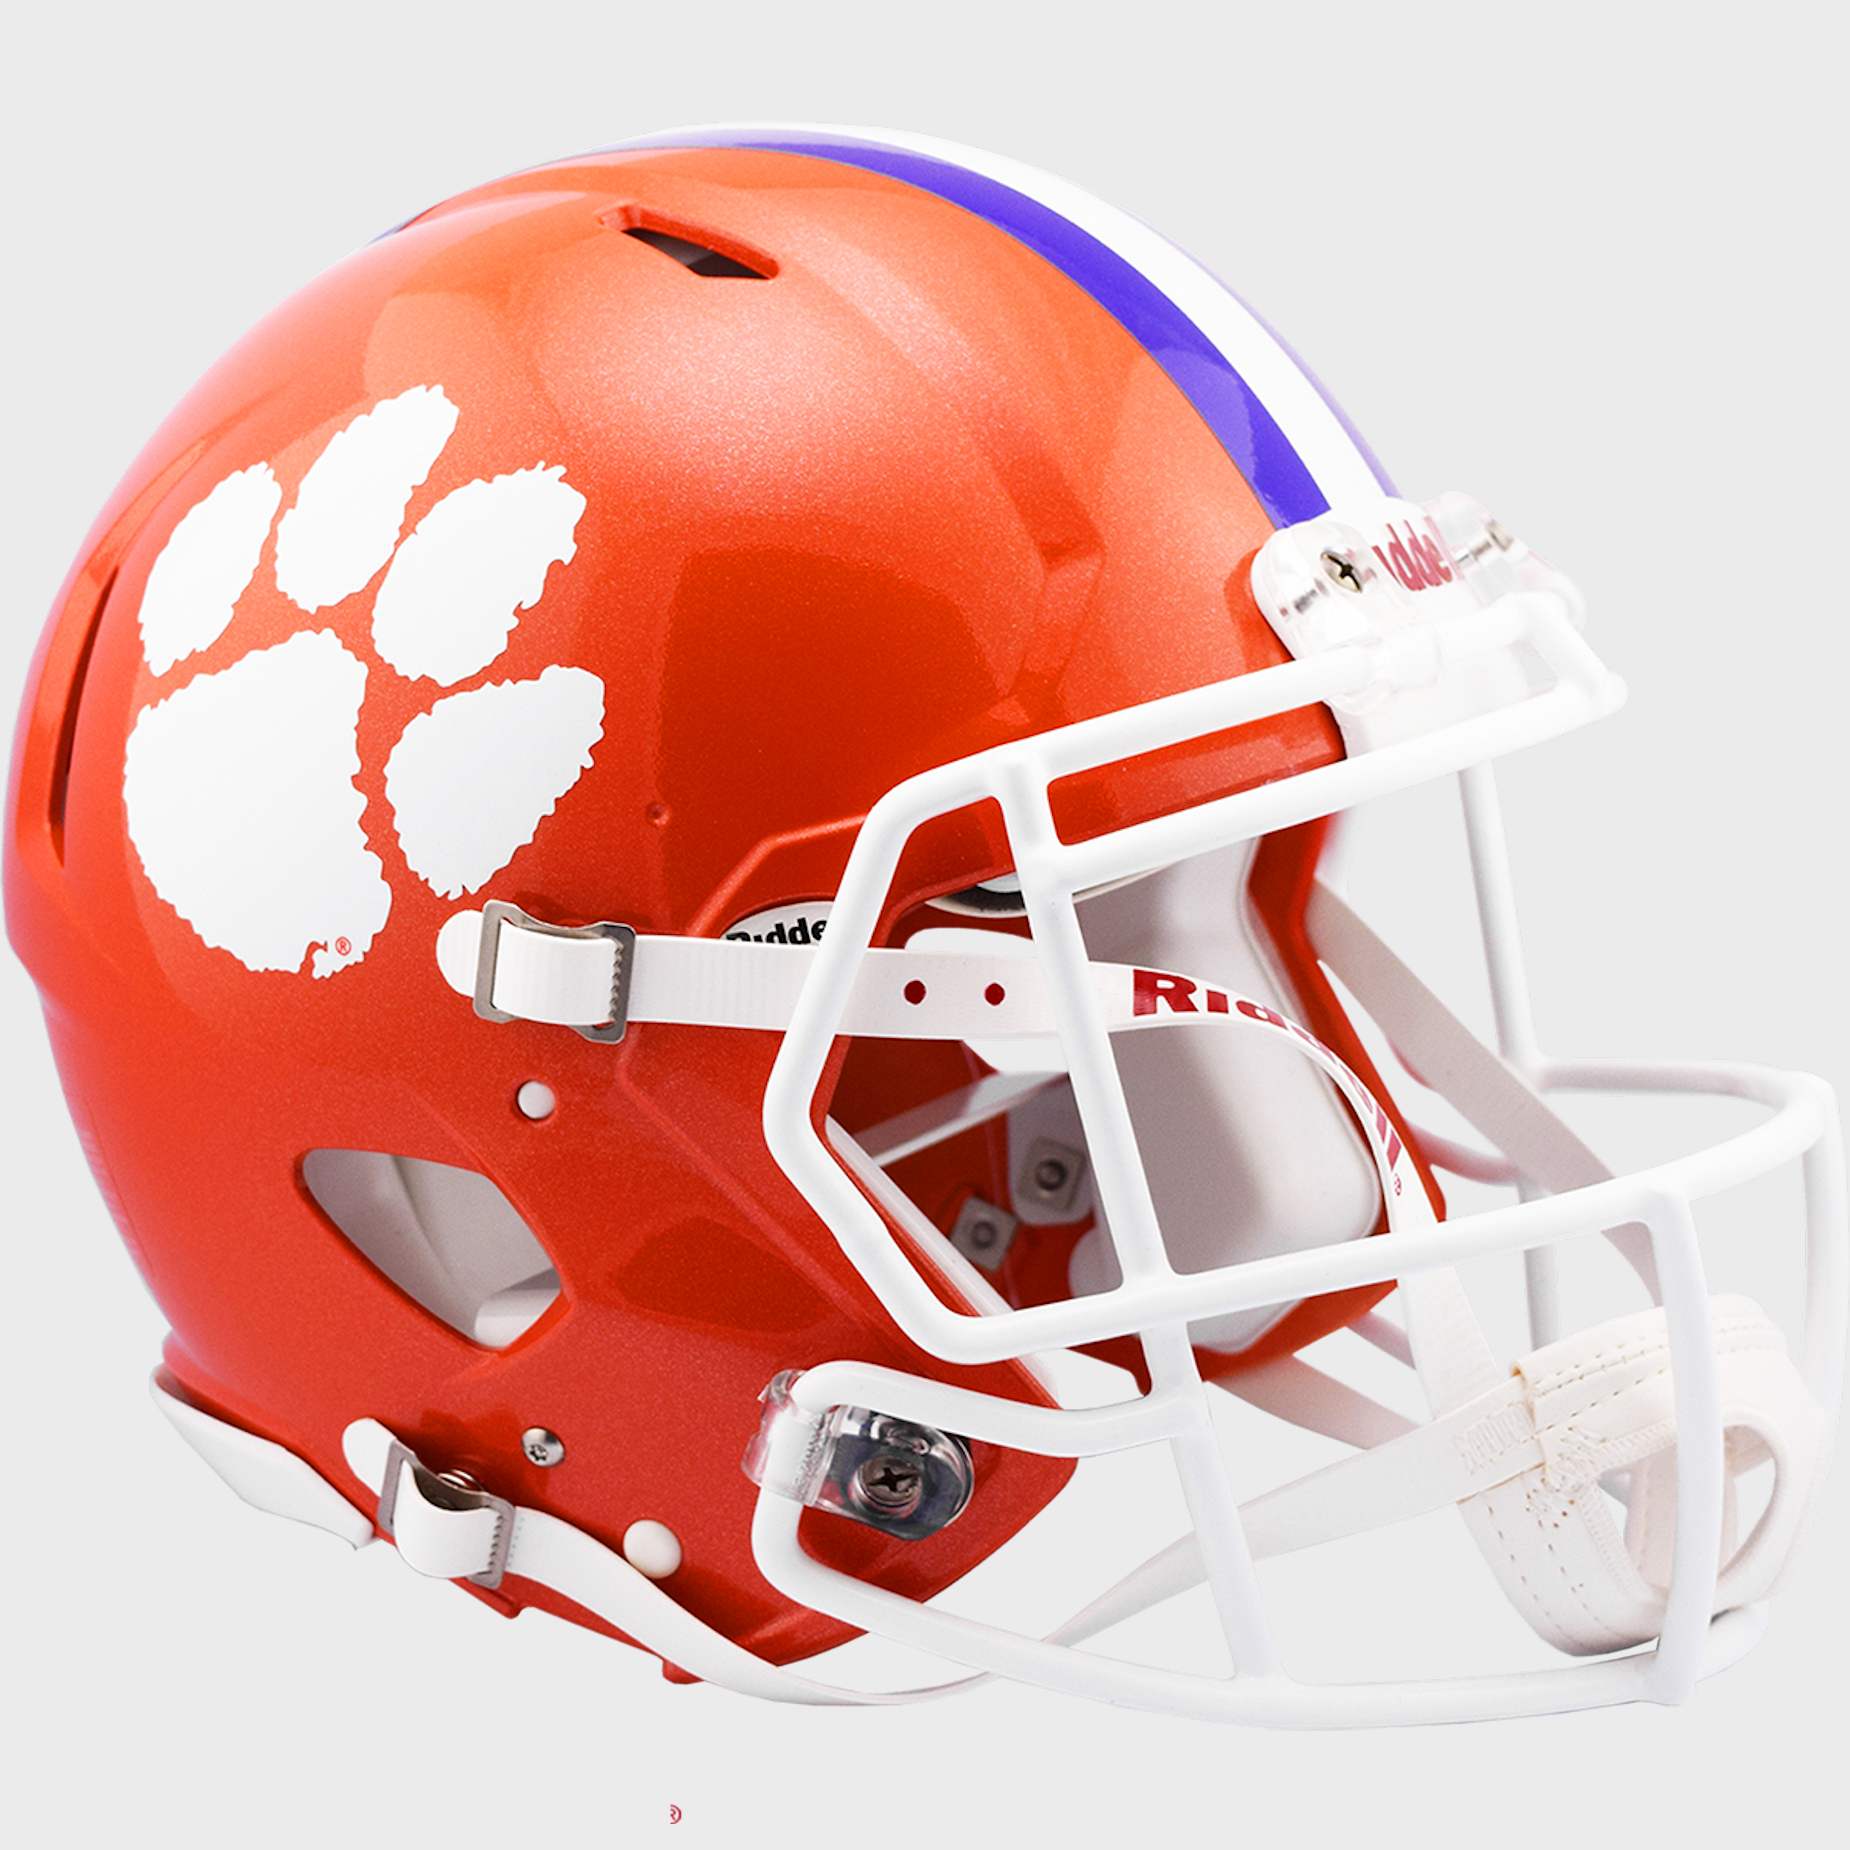 Clemson Tigers authentic full size helmet